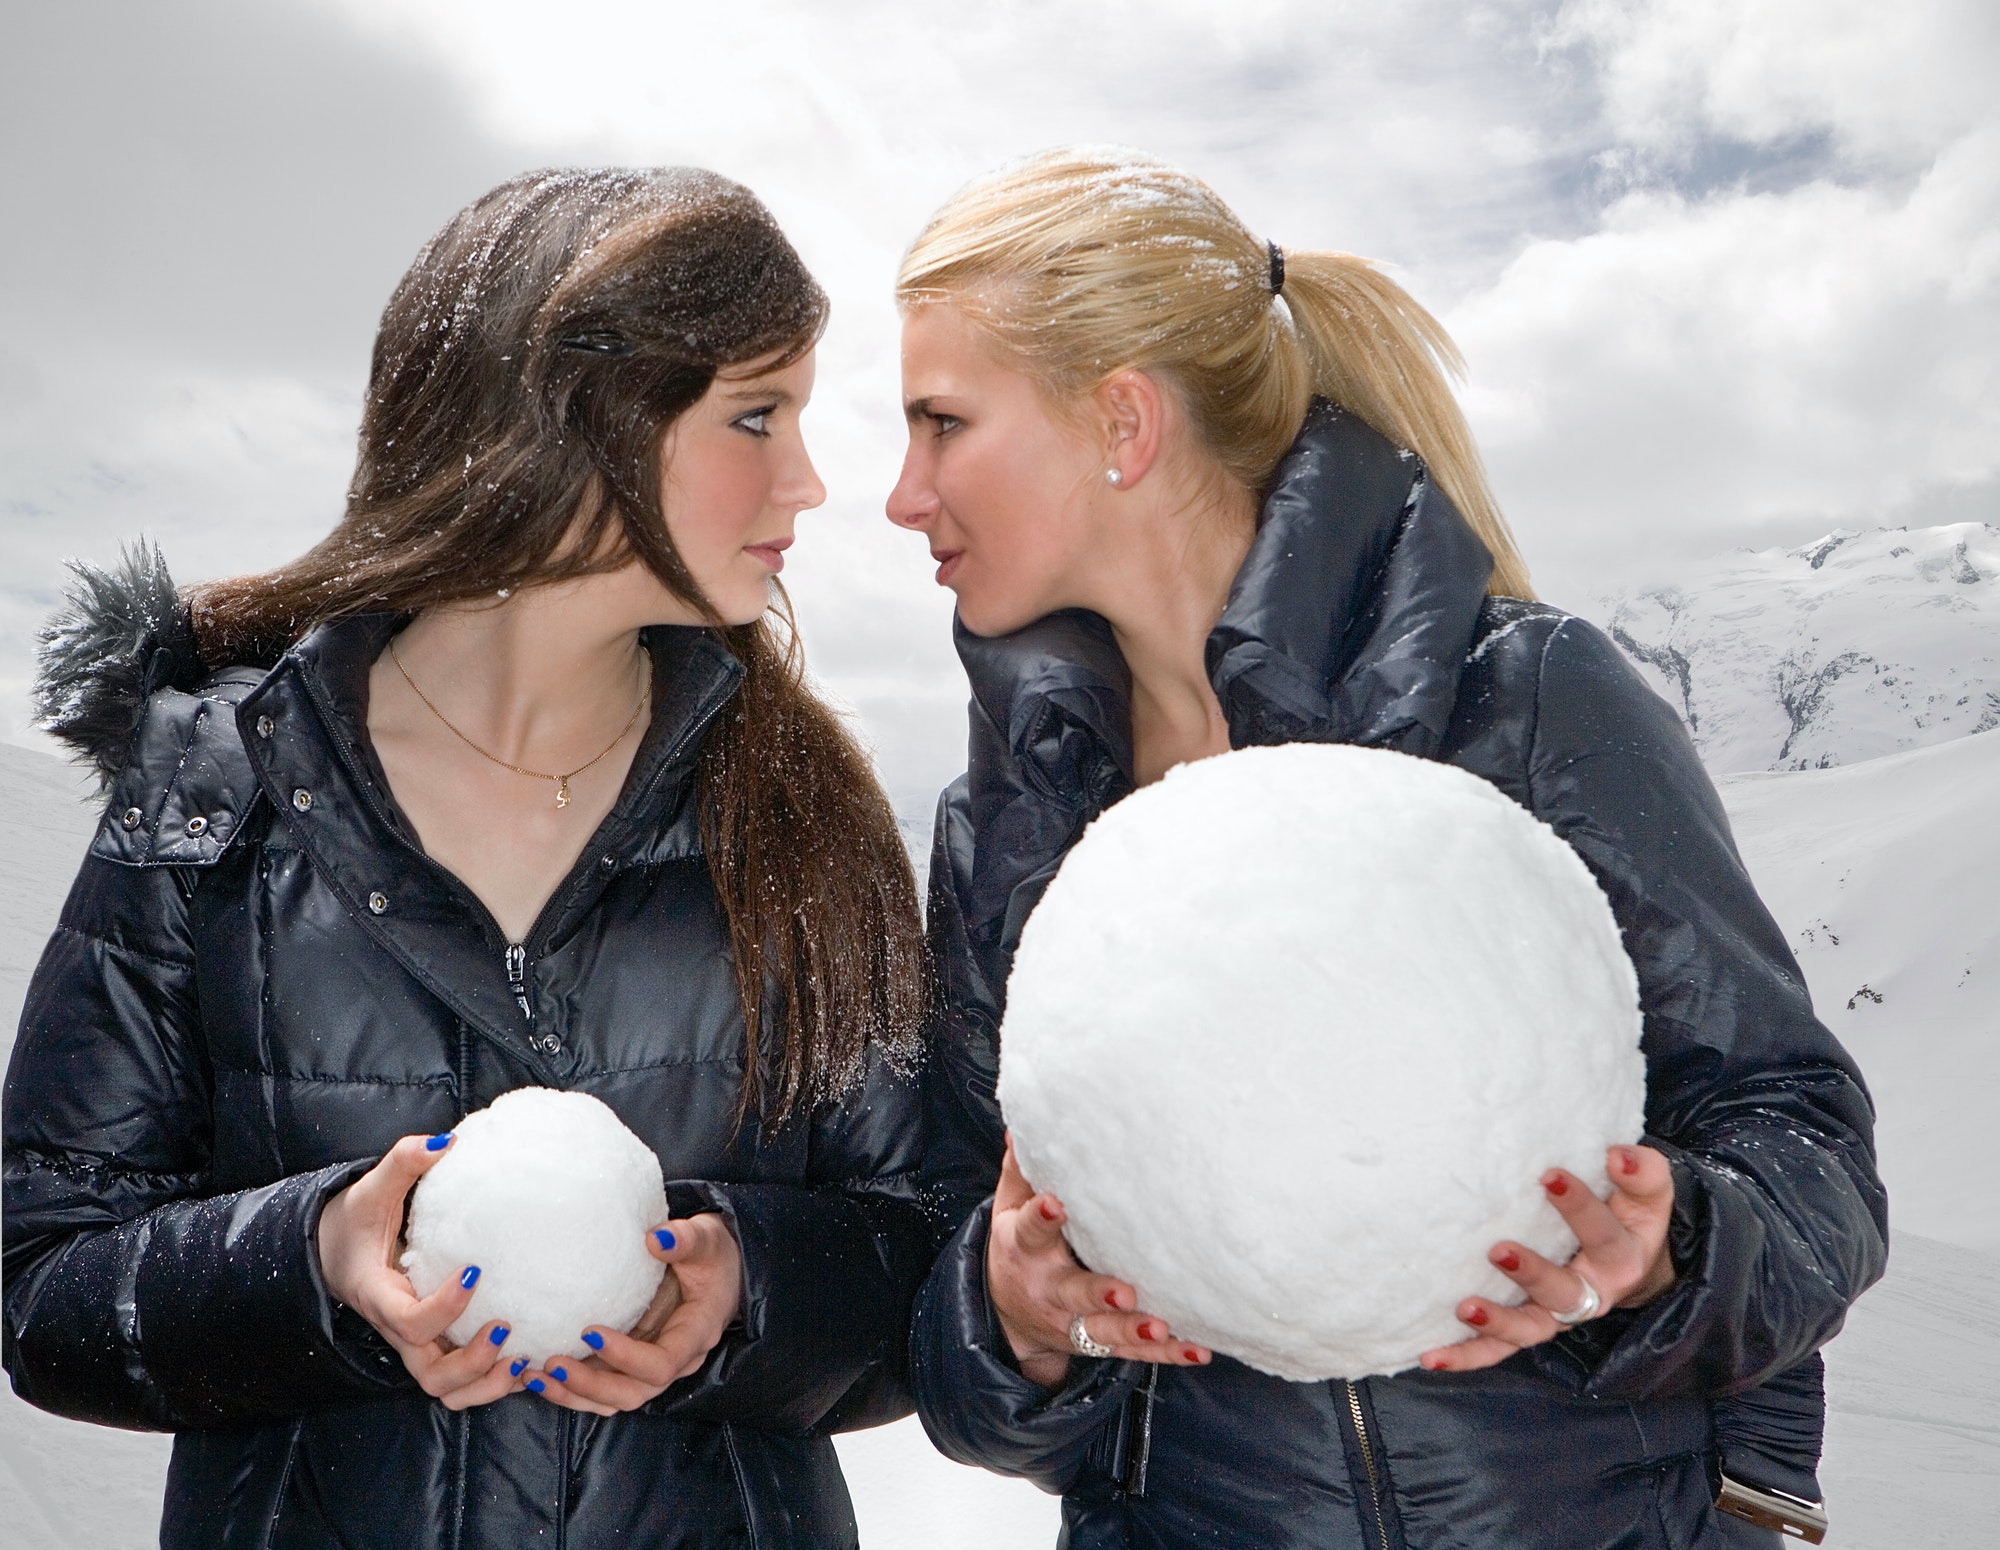 Teen girls challenge with snowballs